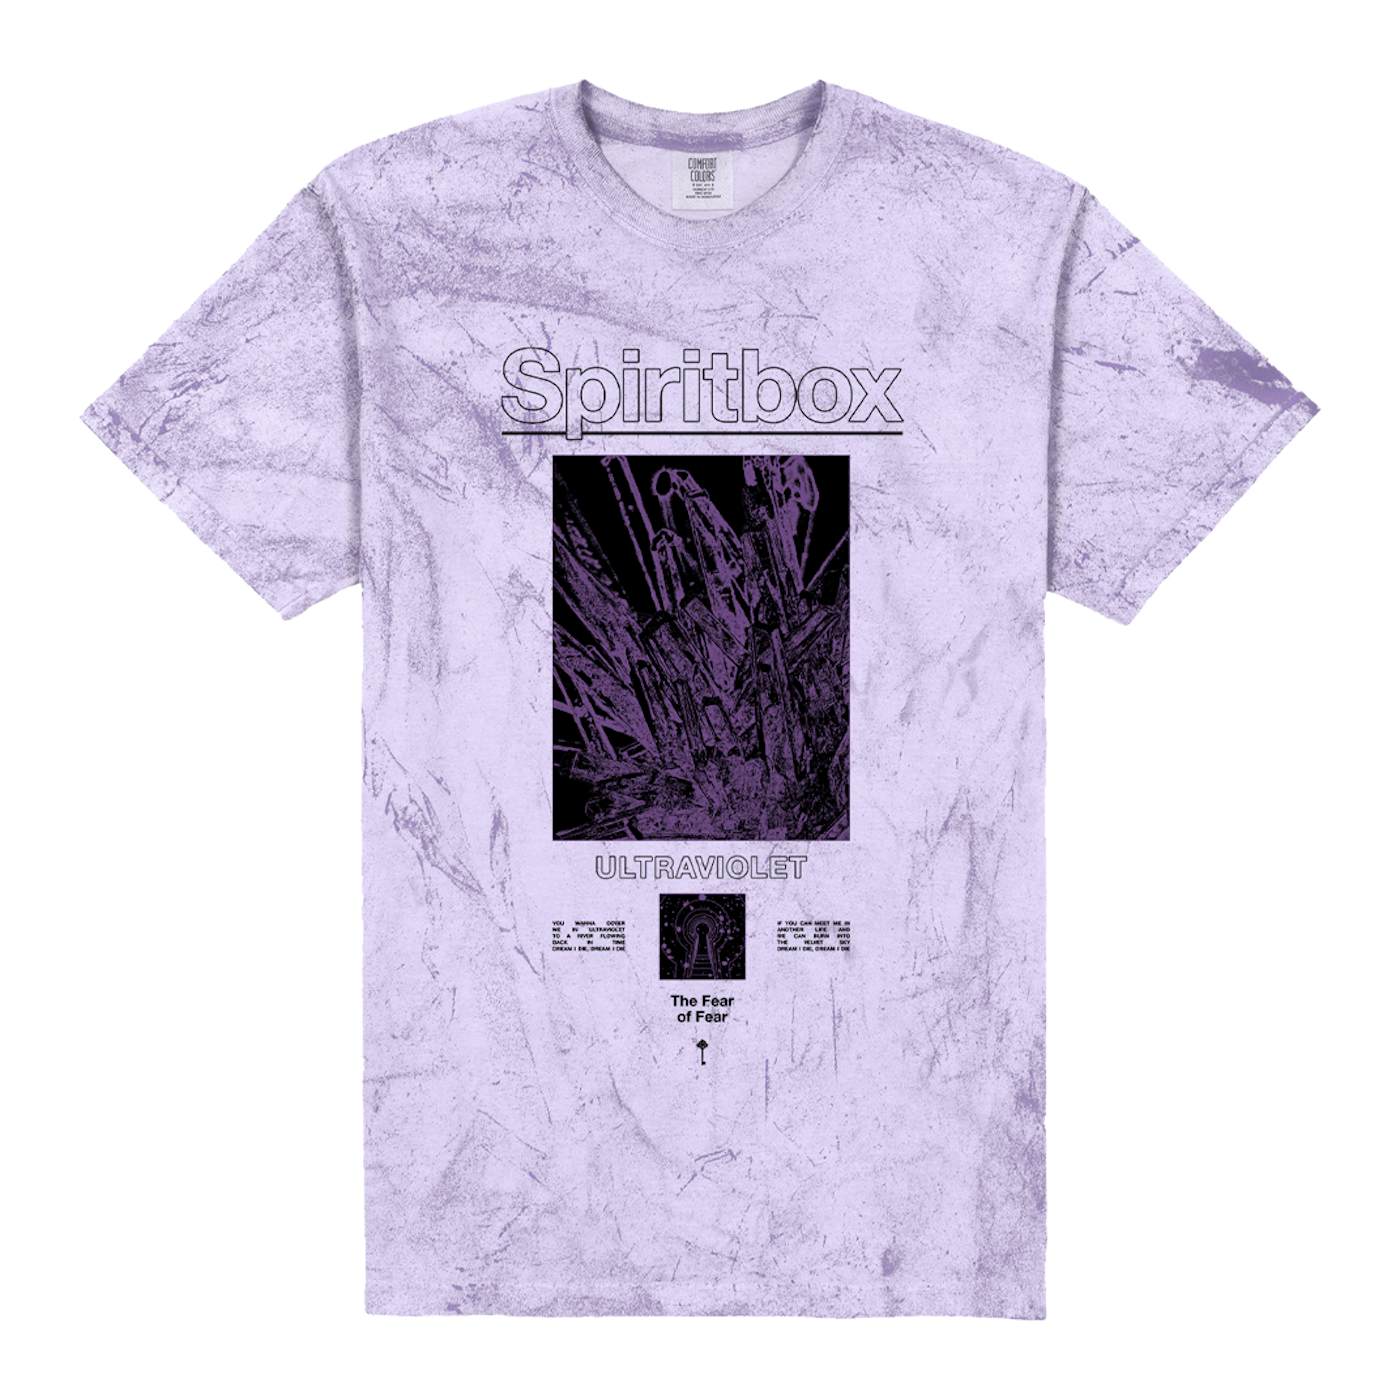 Spiritbox "Ultraviolet" T-Shirt